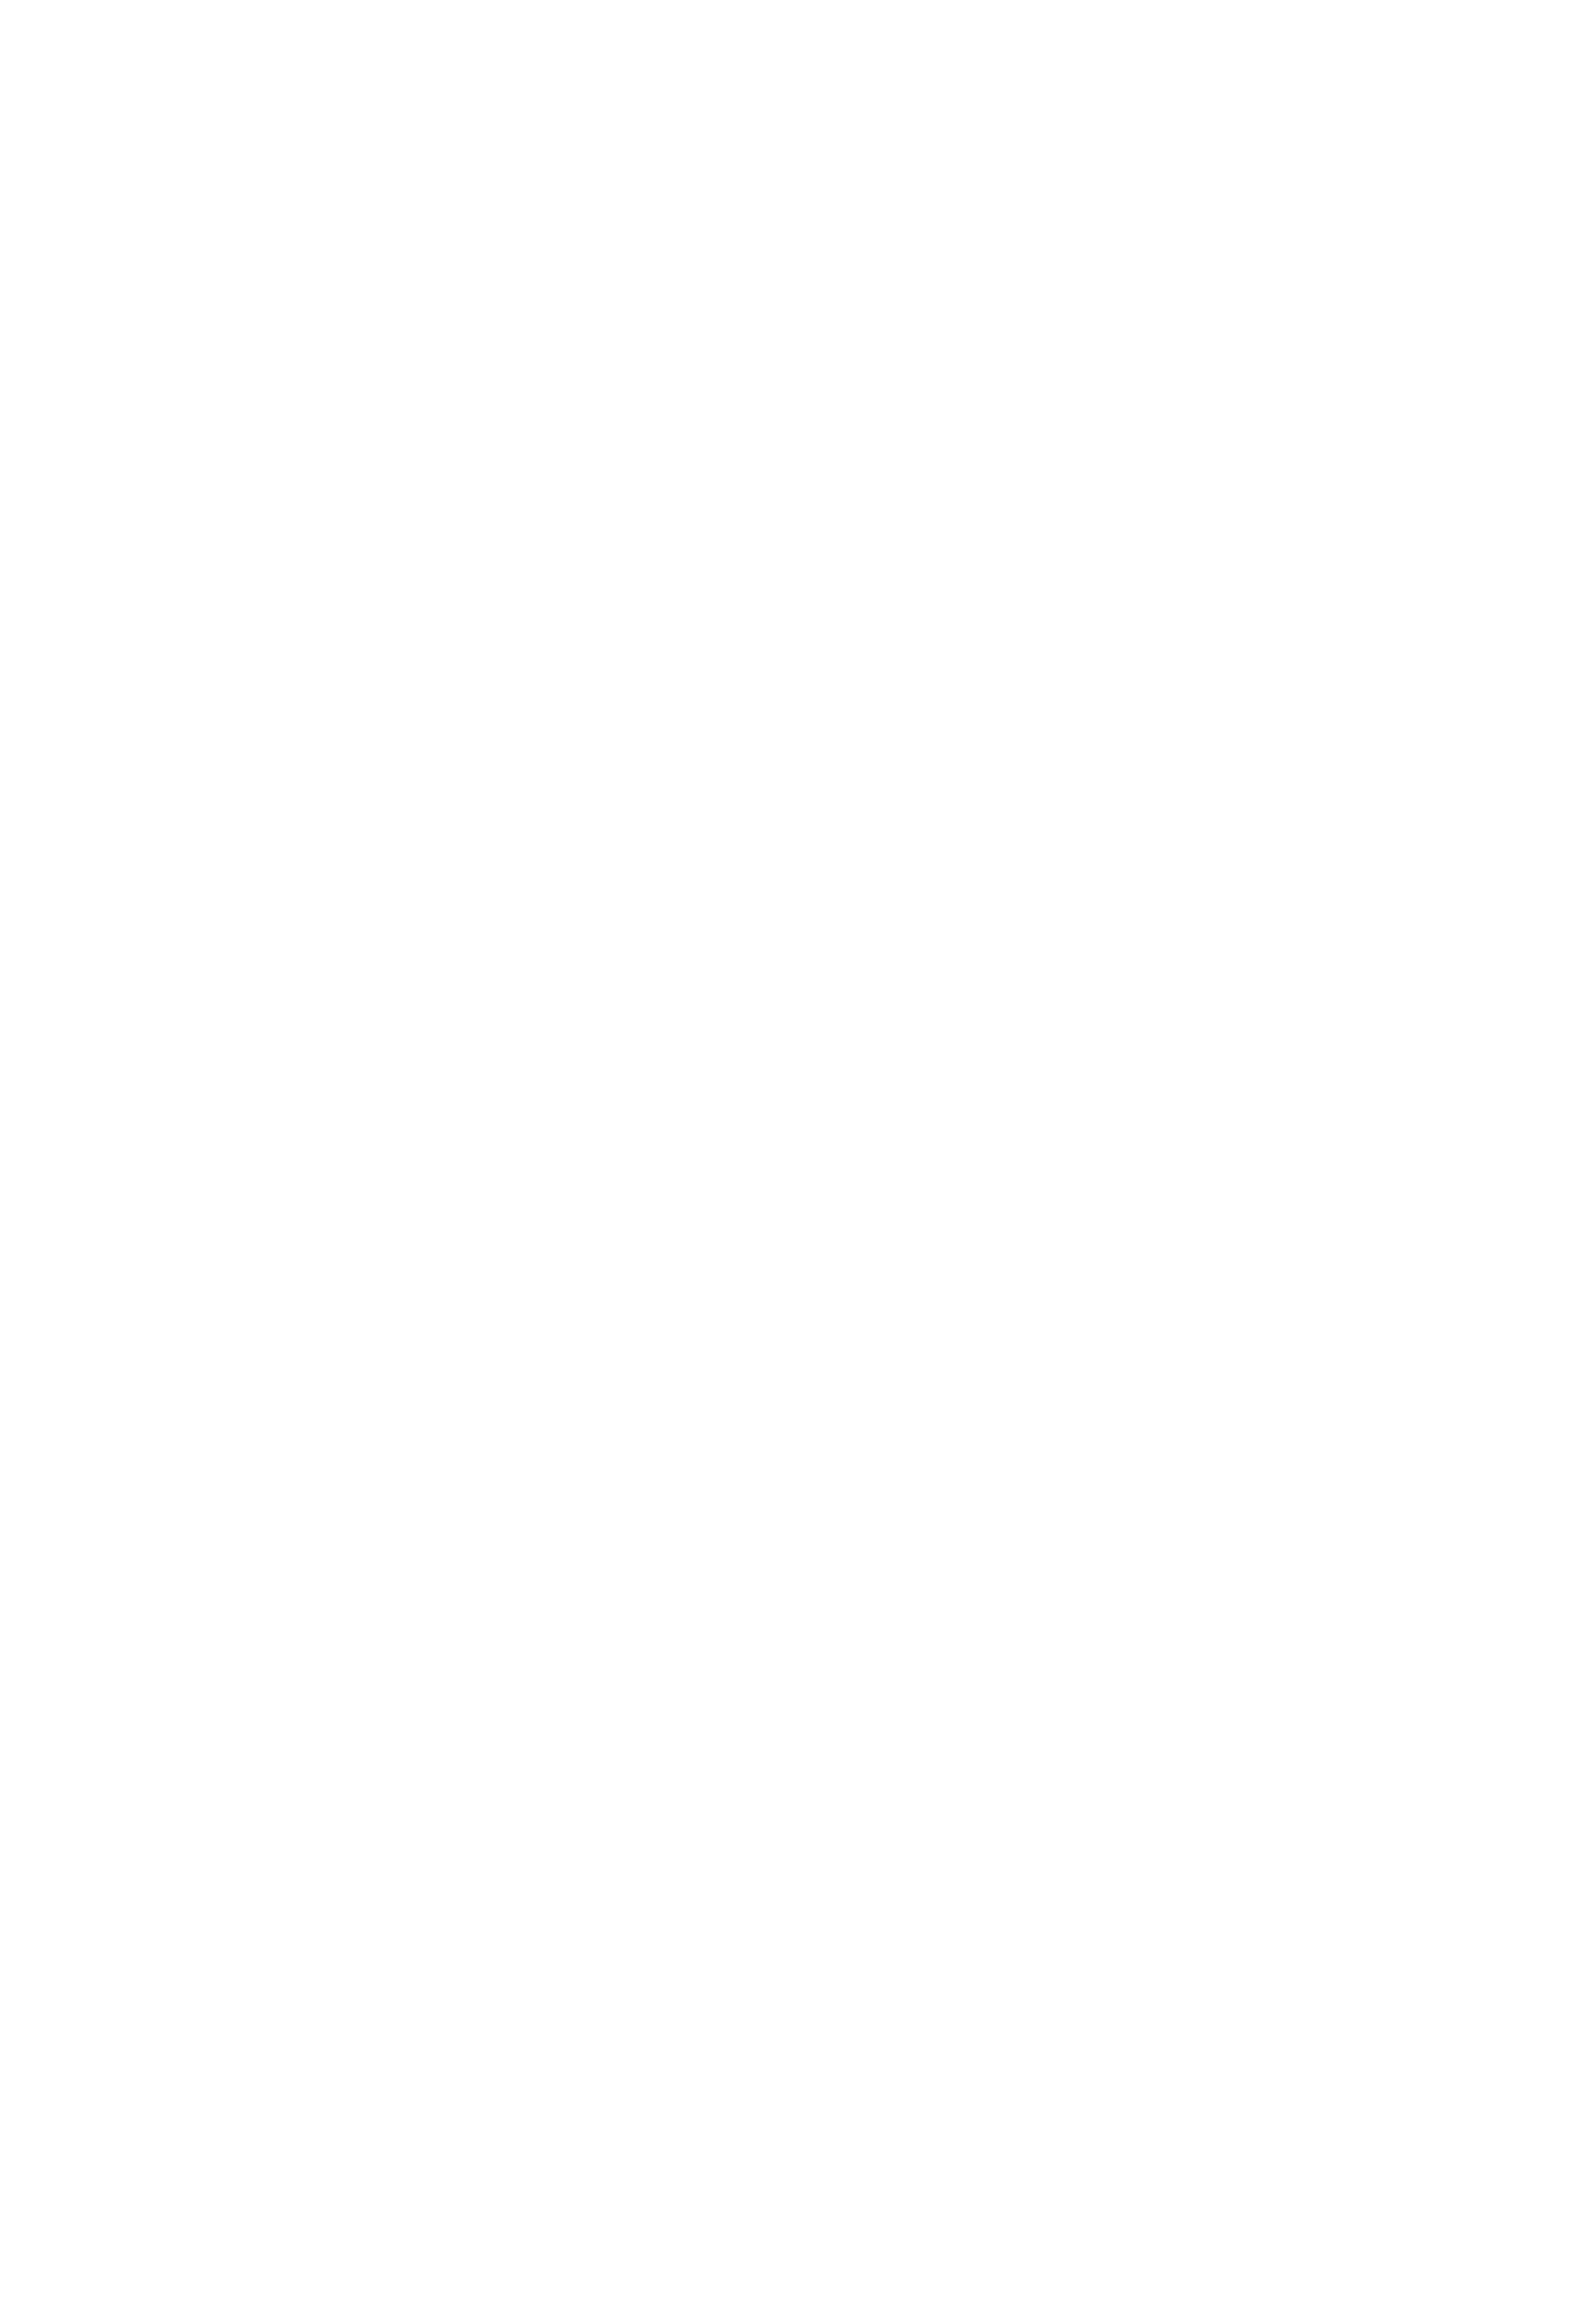 SPSC Group